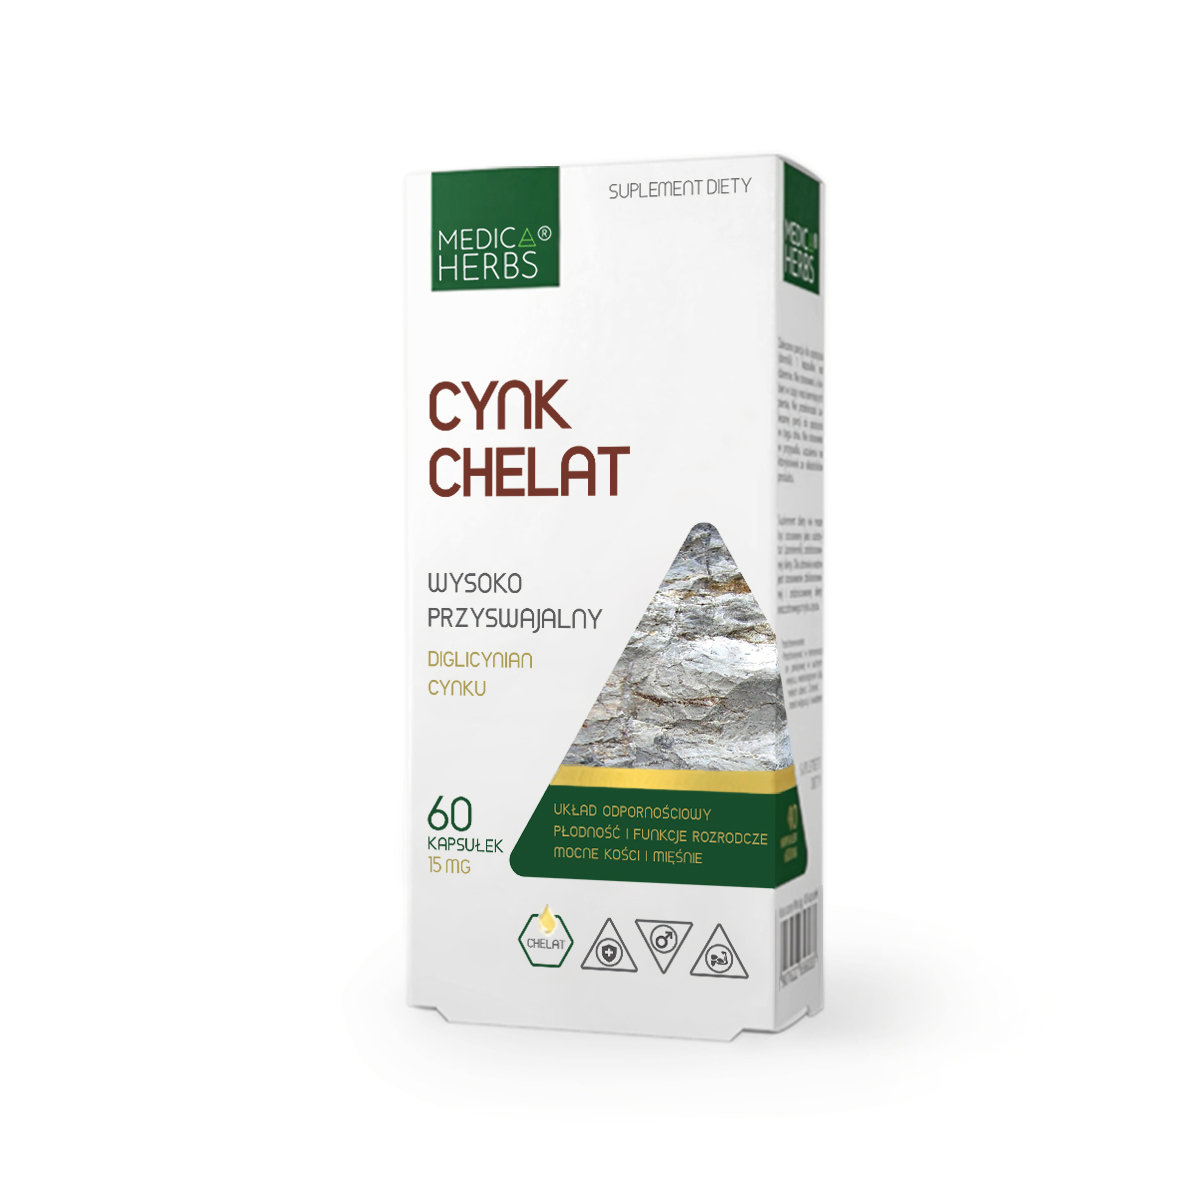 Cynk Chelat 15 mg 60 kapsułek MEDICA HERBS